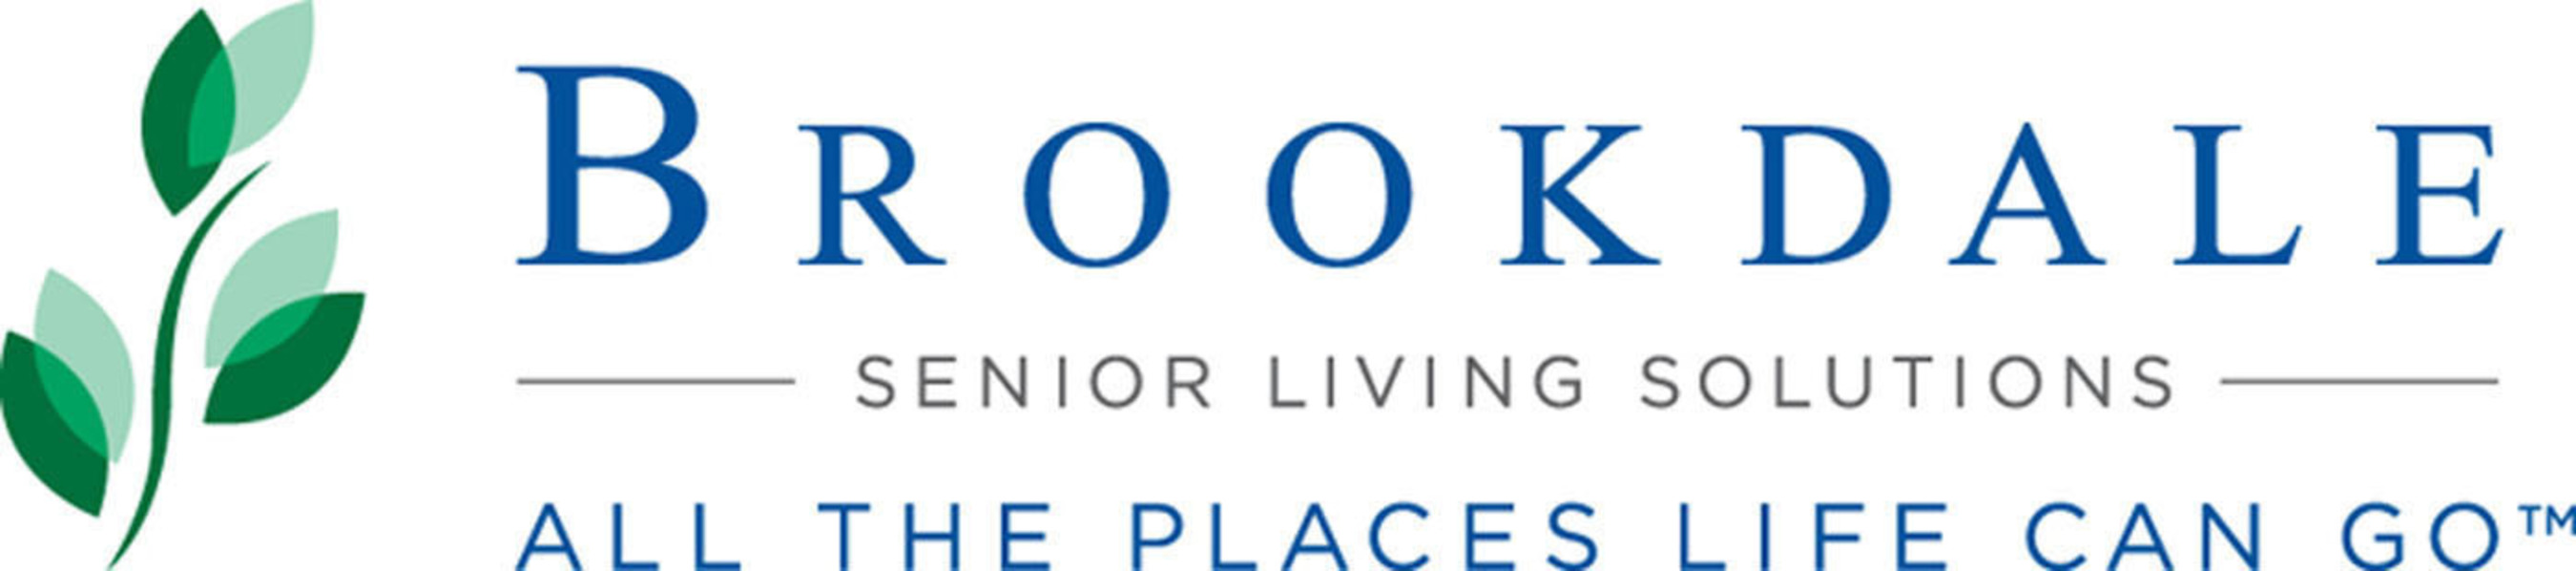 Brookdale Senior Living Inc. Logo. (PRNewsFoto/Brookdale Senior Living Inc.) (PRNewsFoto/)